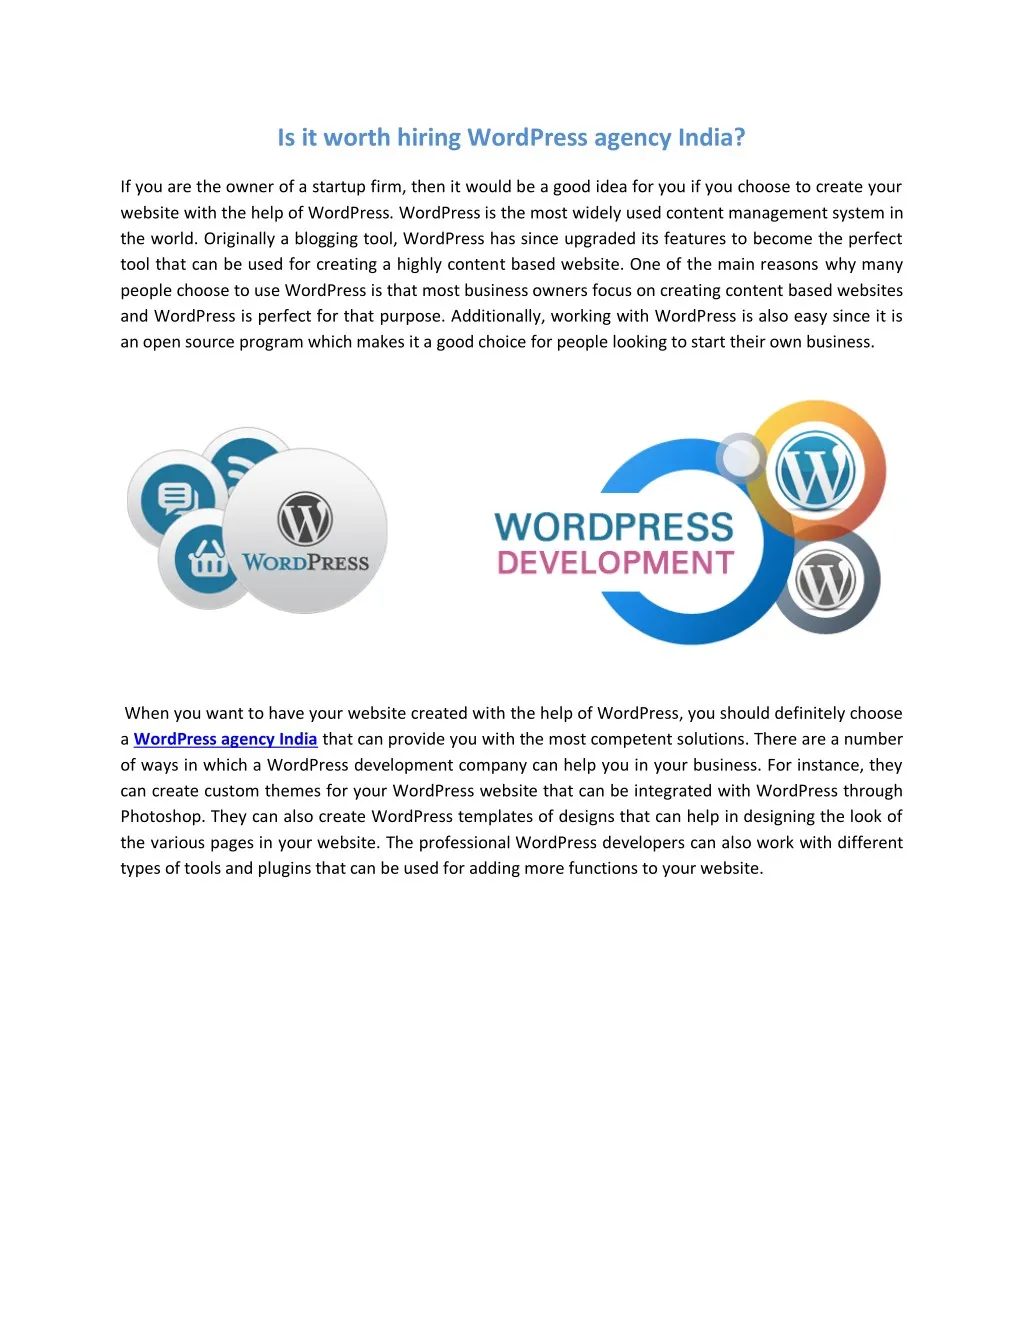 is it worth hiring wordpress agency india